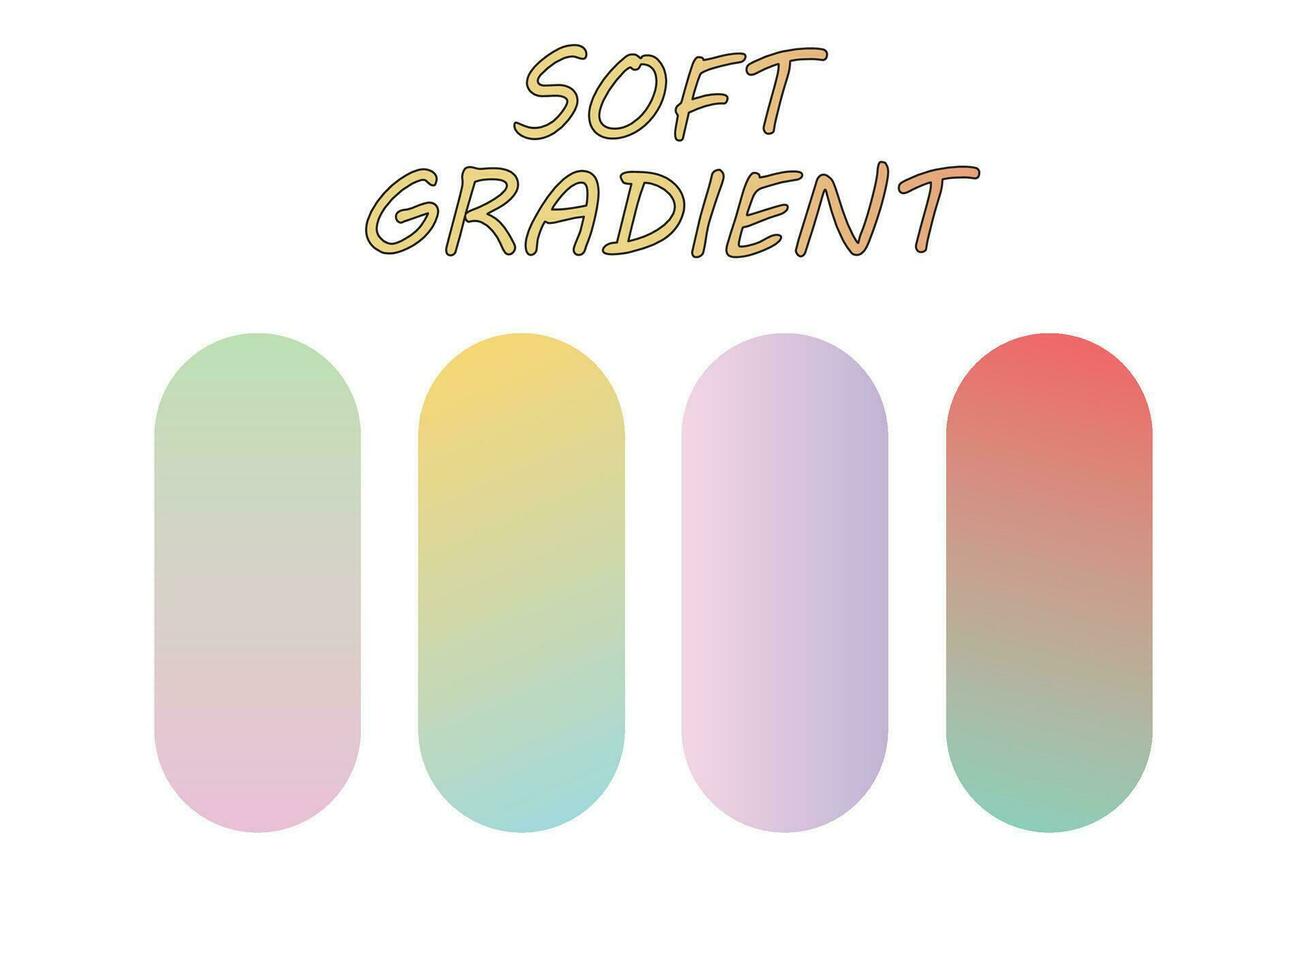 Sanft Farbe Palette, Sanft Farbe Gradation Sammlung, Gradation Farbe Palette zum Design vektor